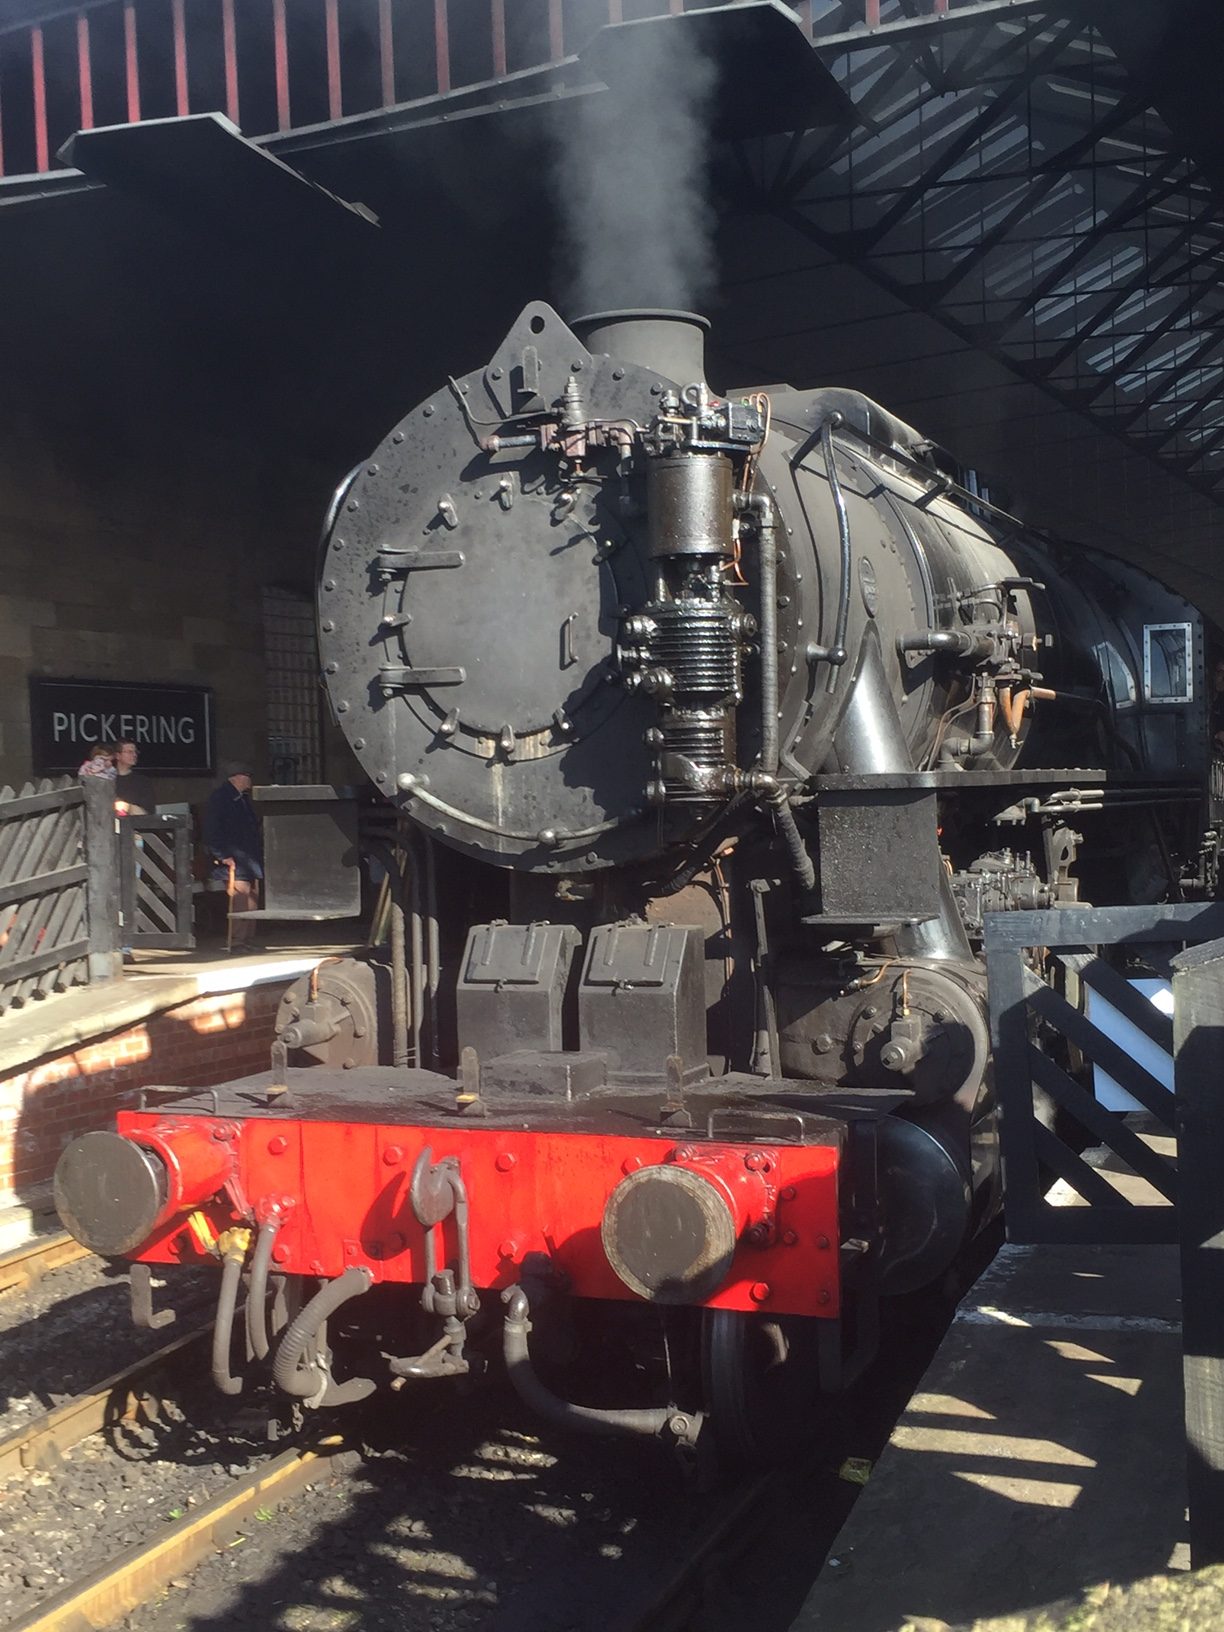 North Yorkshire Moors Railway - NYMR: Wartime Baldwin. A visiting engine. At Pickering.